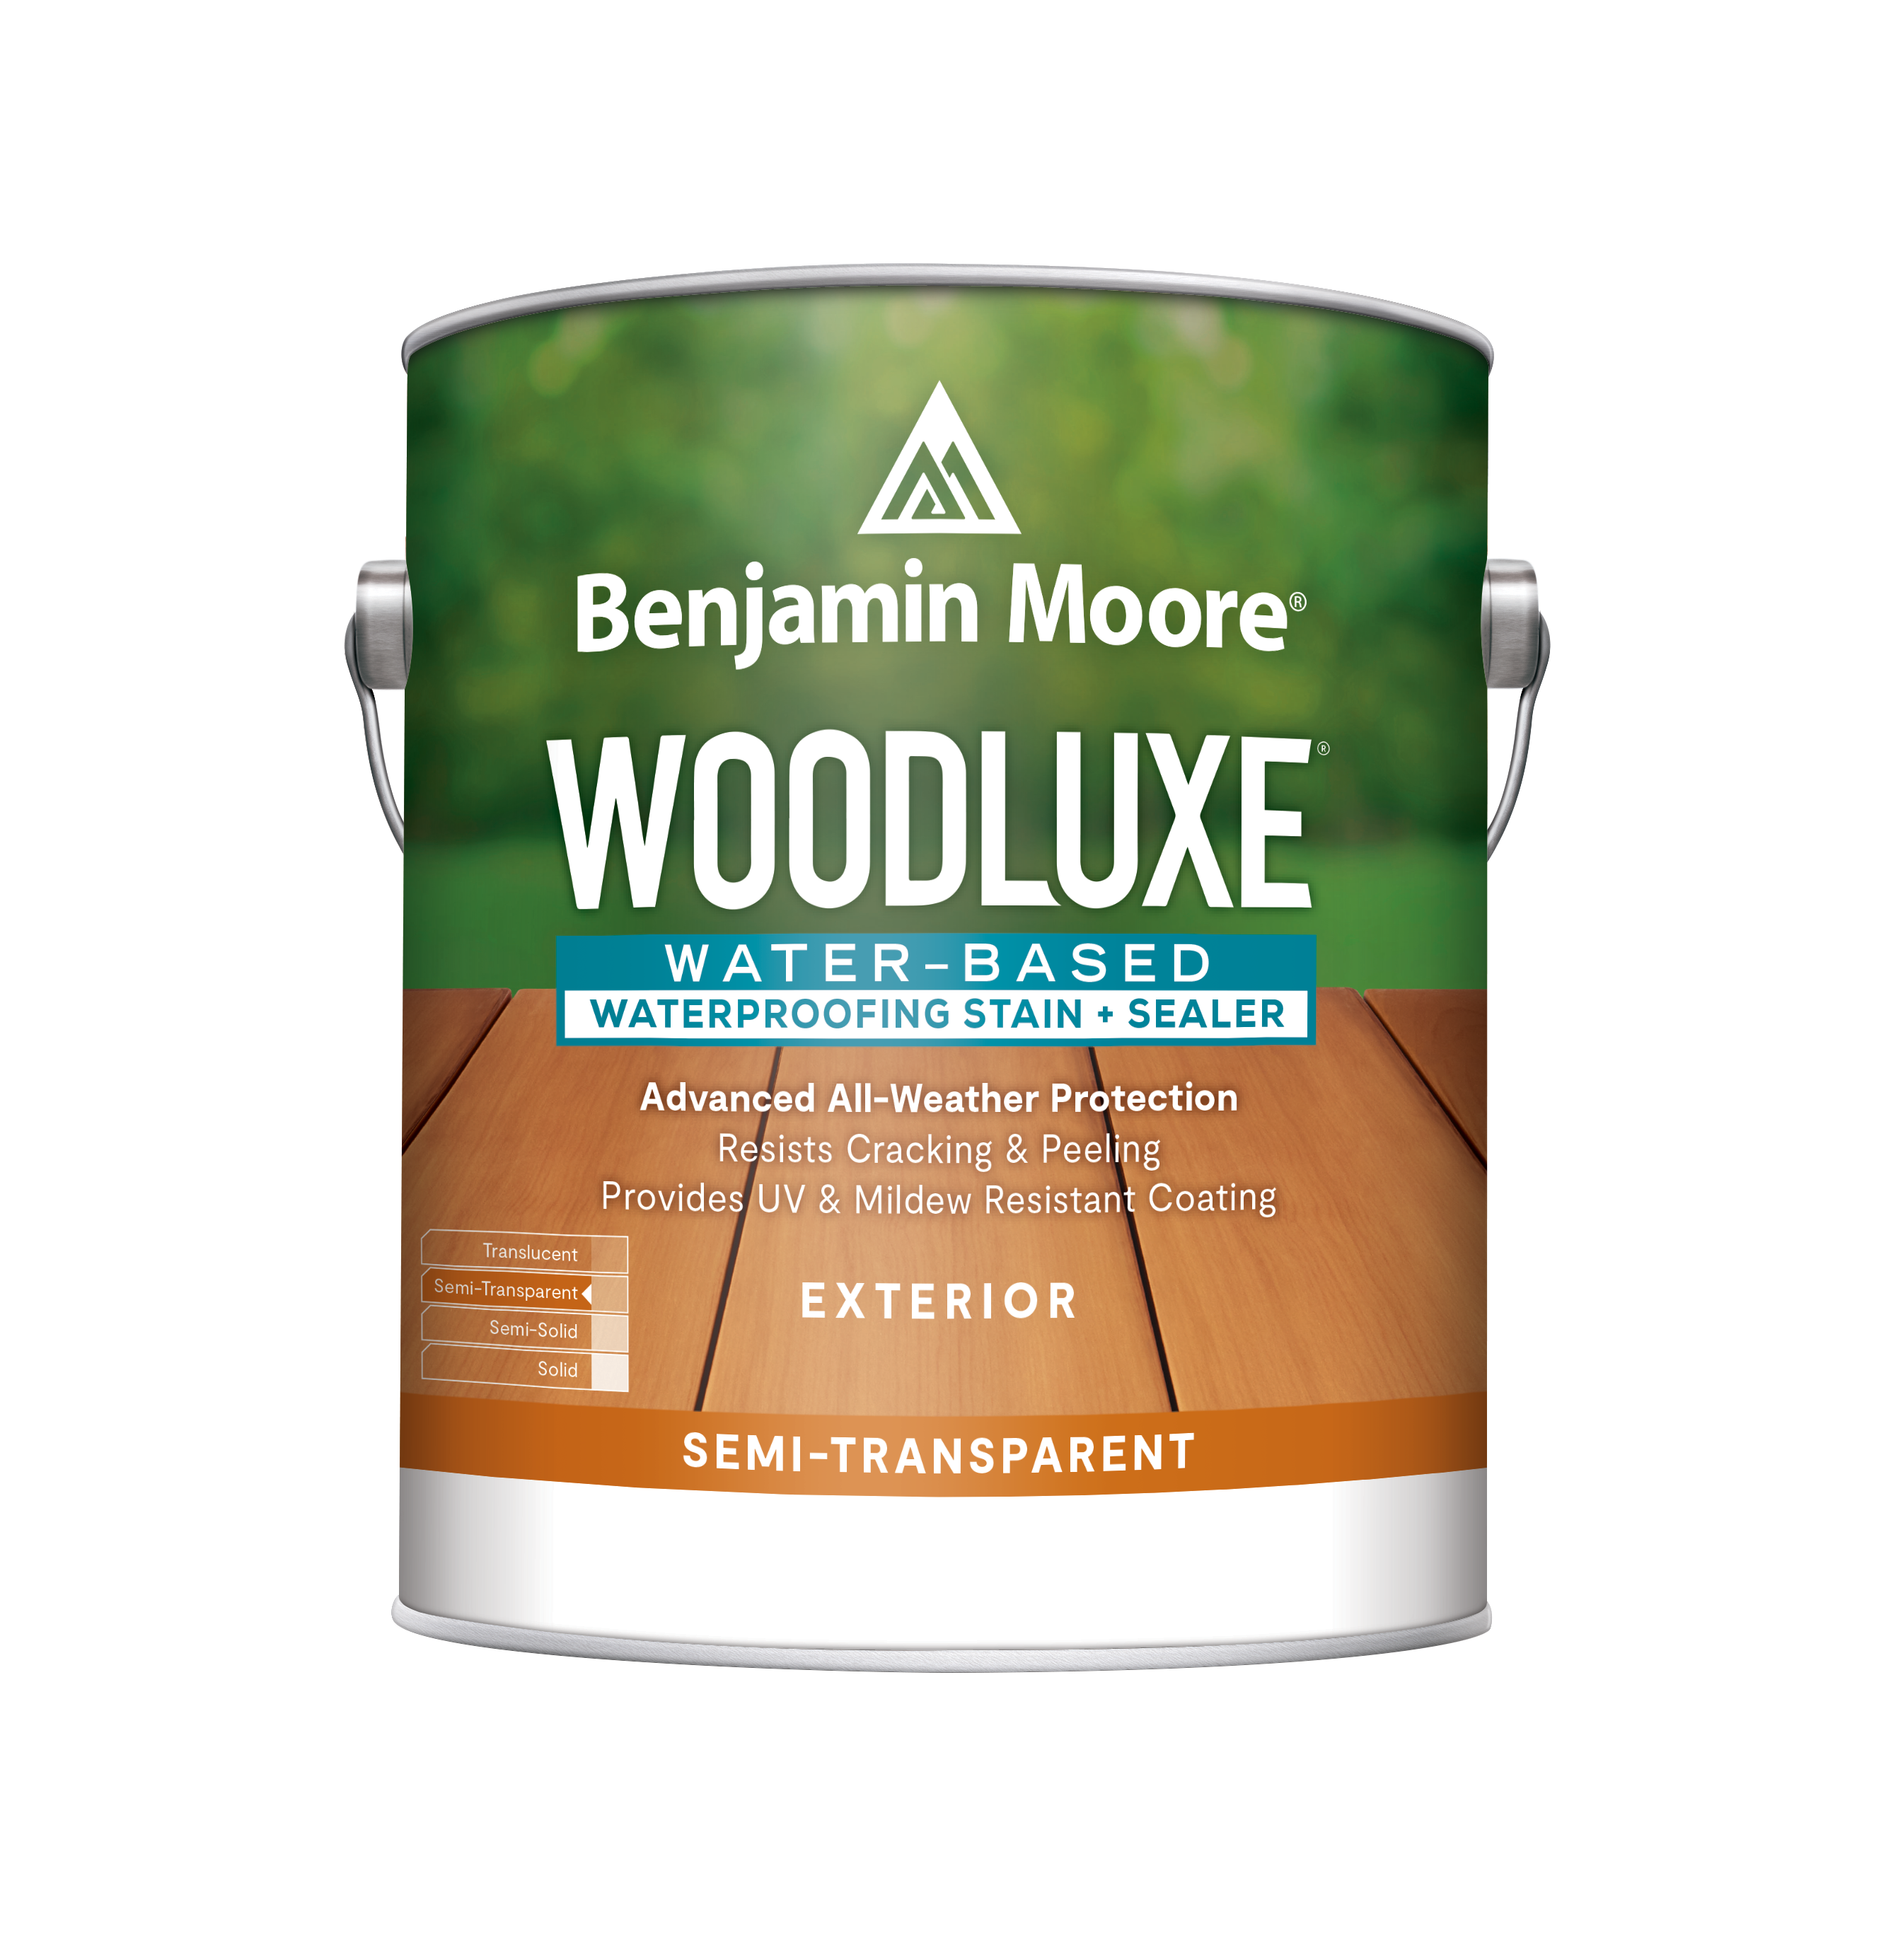 Woodluxe® Water-Based Waterproofing Stain + Sealer - Semi-Transparent 0692